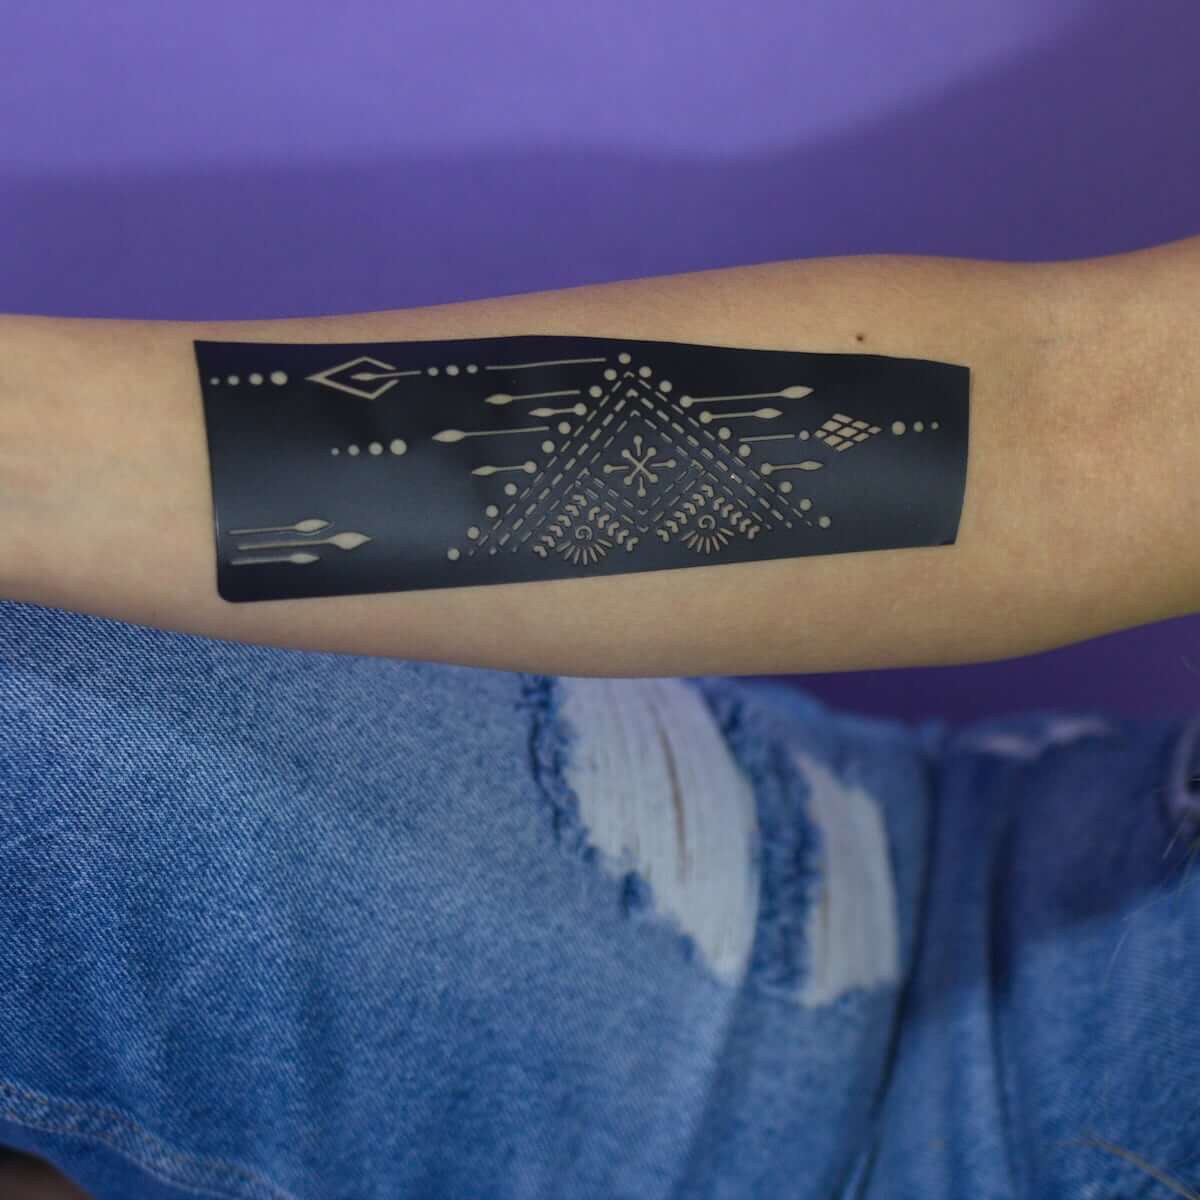 Ruma - Henna stencil on forearm before applying henna paste